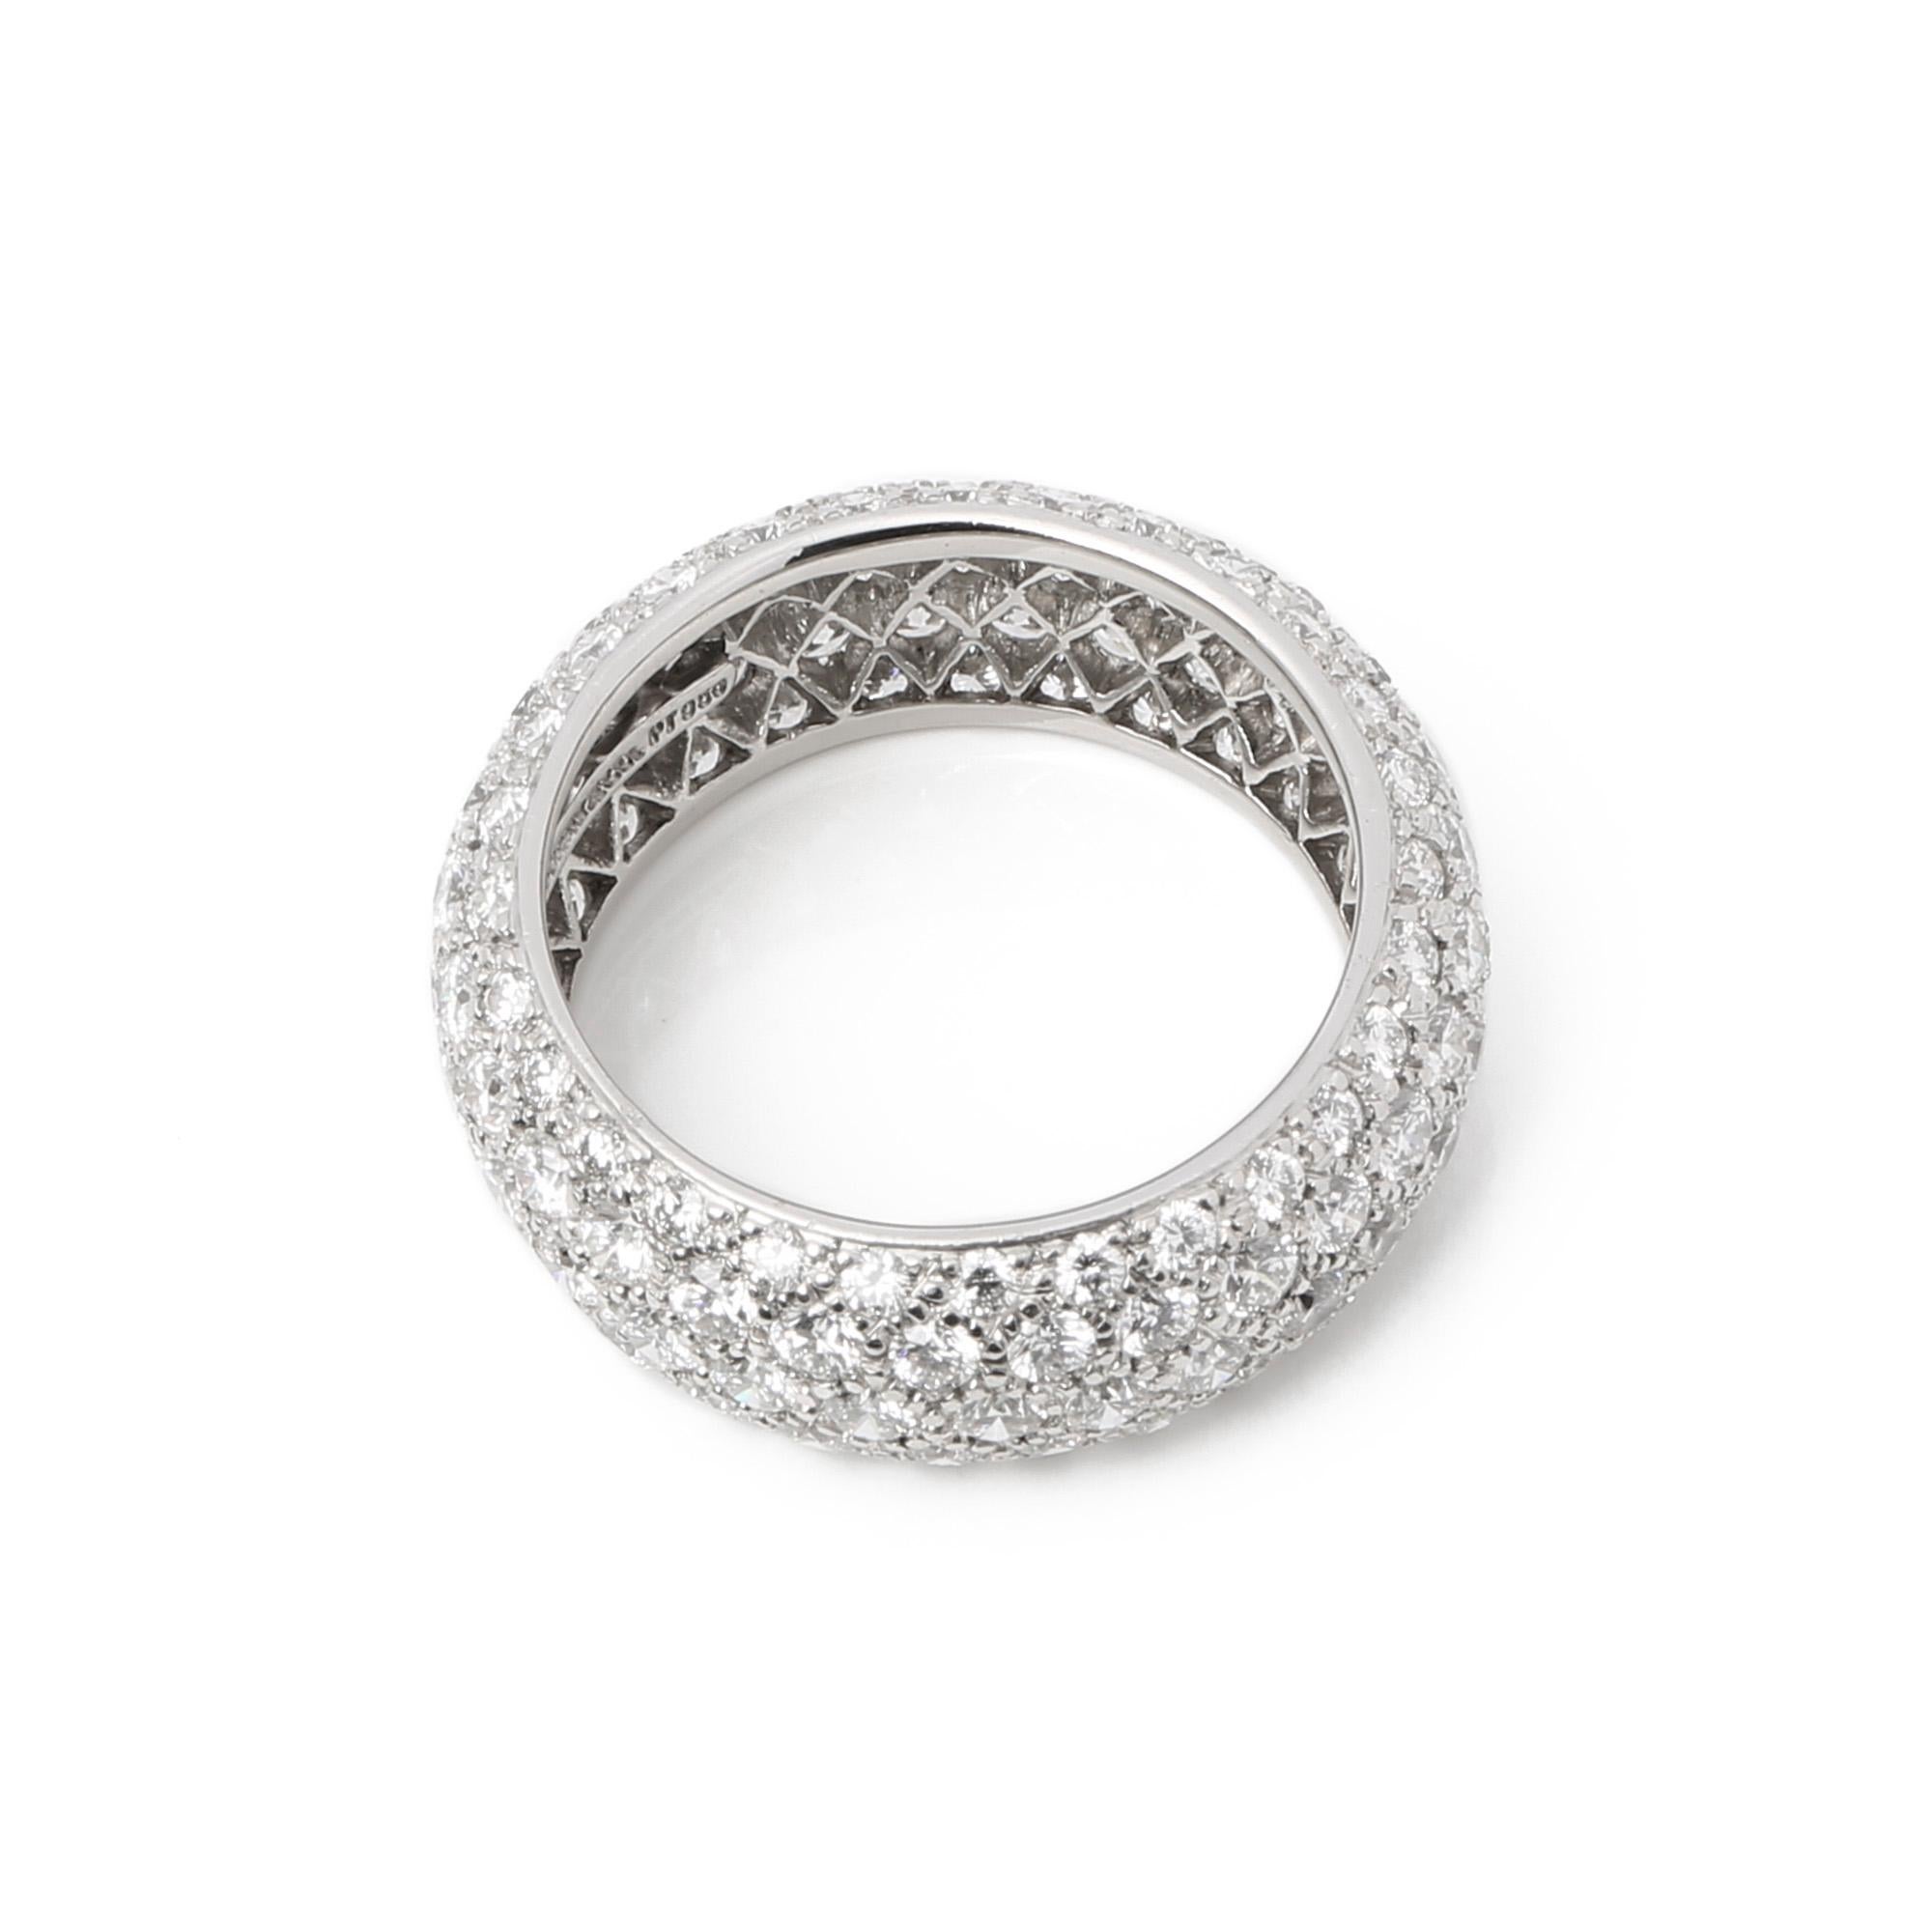 Contemporary Tiffany & Co. Etoile 5 Band Diamond Ring